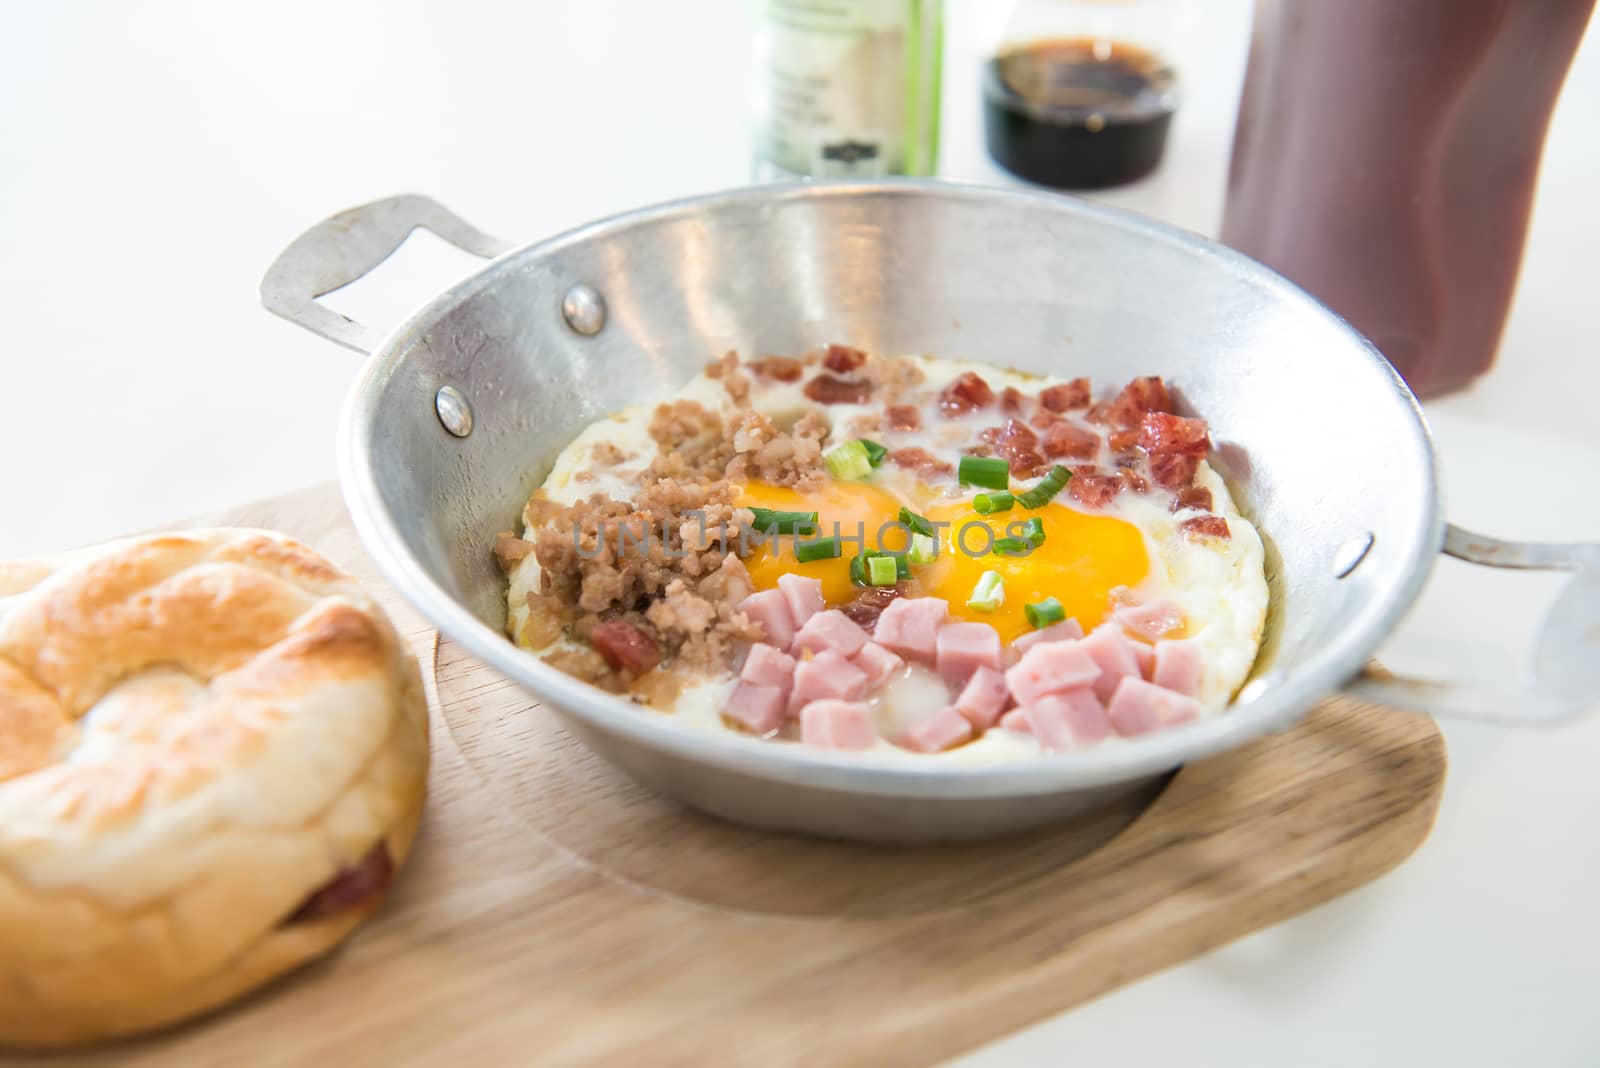 Breakfast - fried eggs, ham, bacon, pork and bread by opasstudio